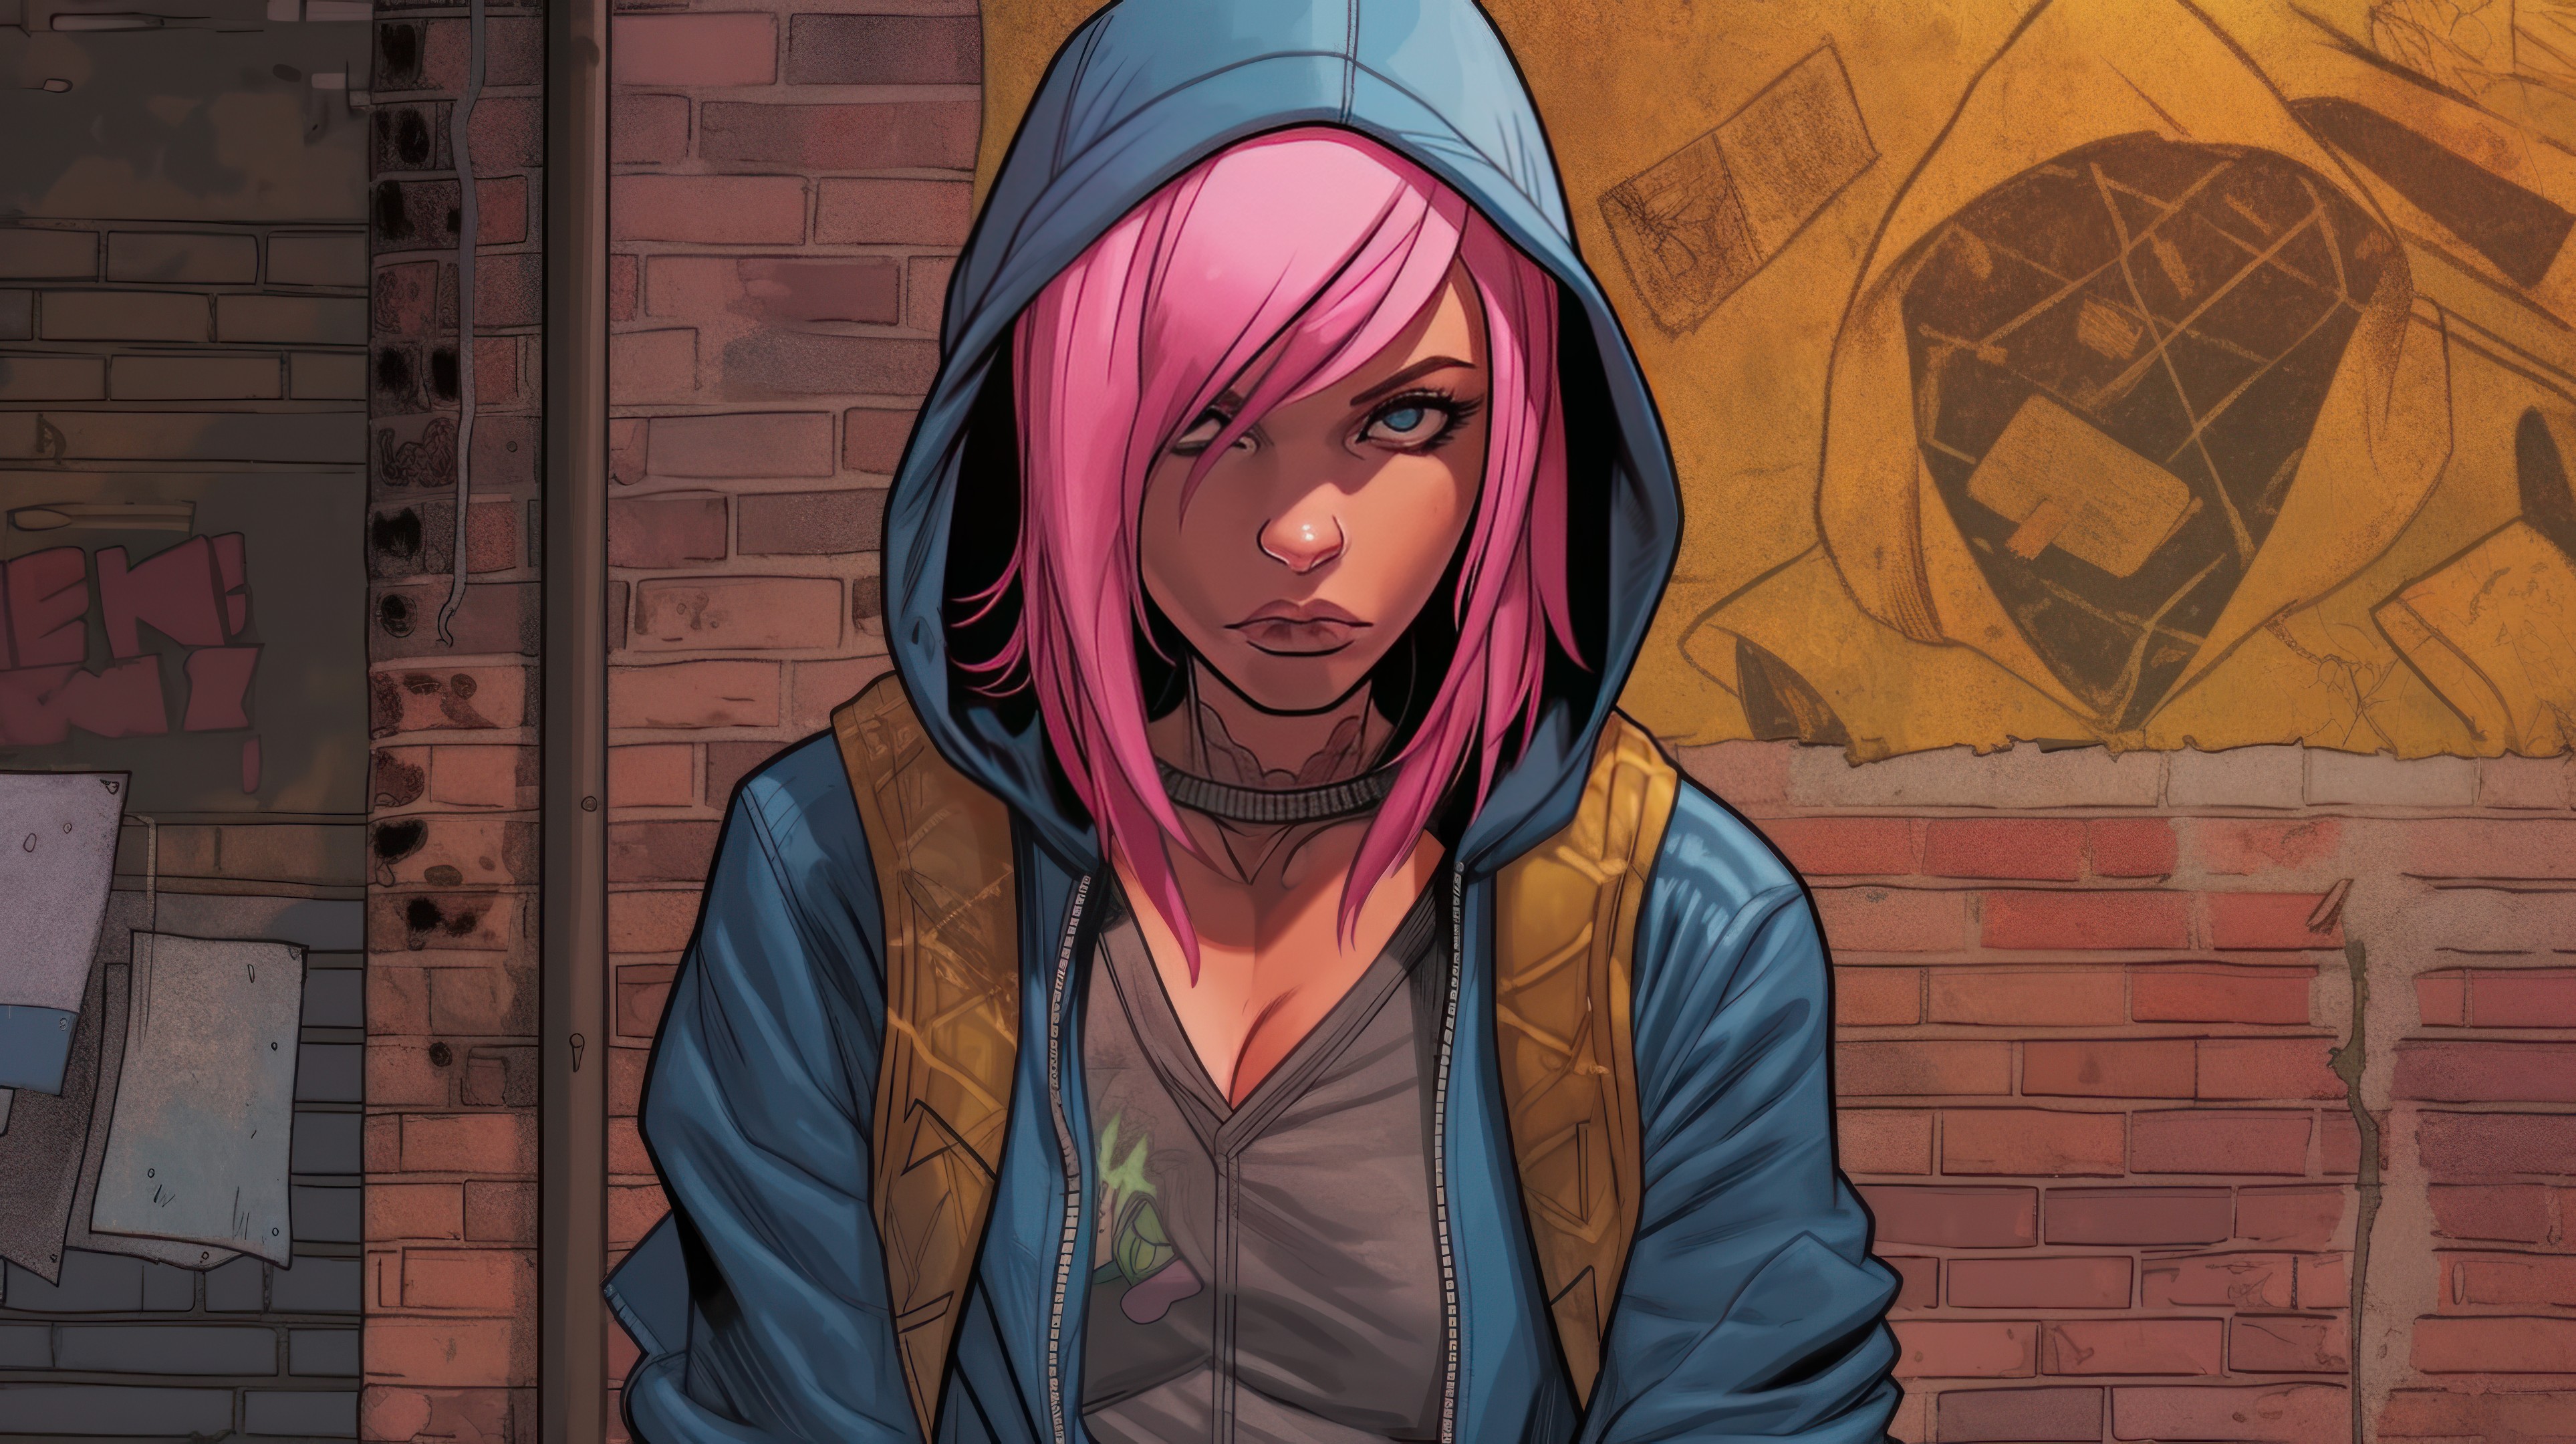 Ai Art Women Comics Pink Hair Hooded Jacket Alleyway Looking At Viewer 3854x2160